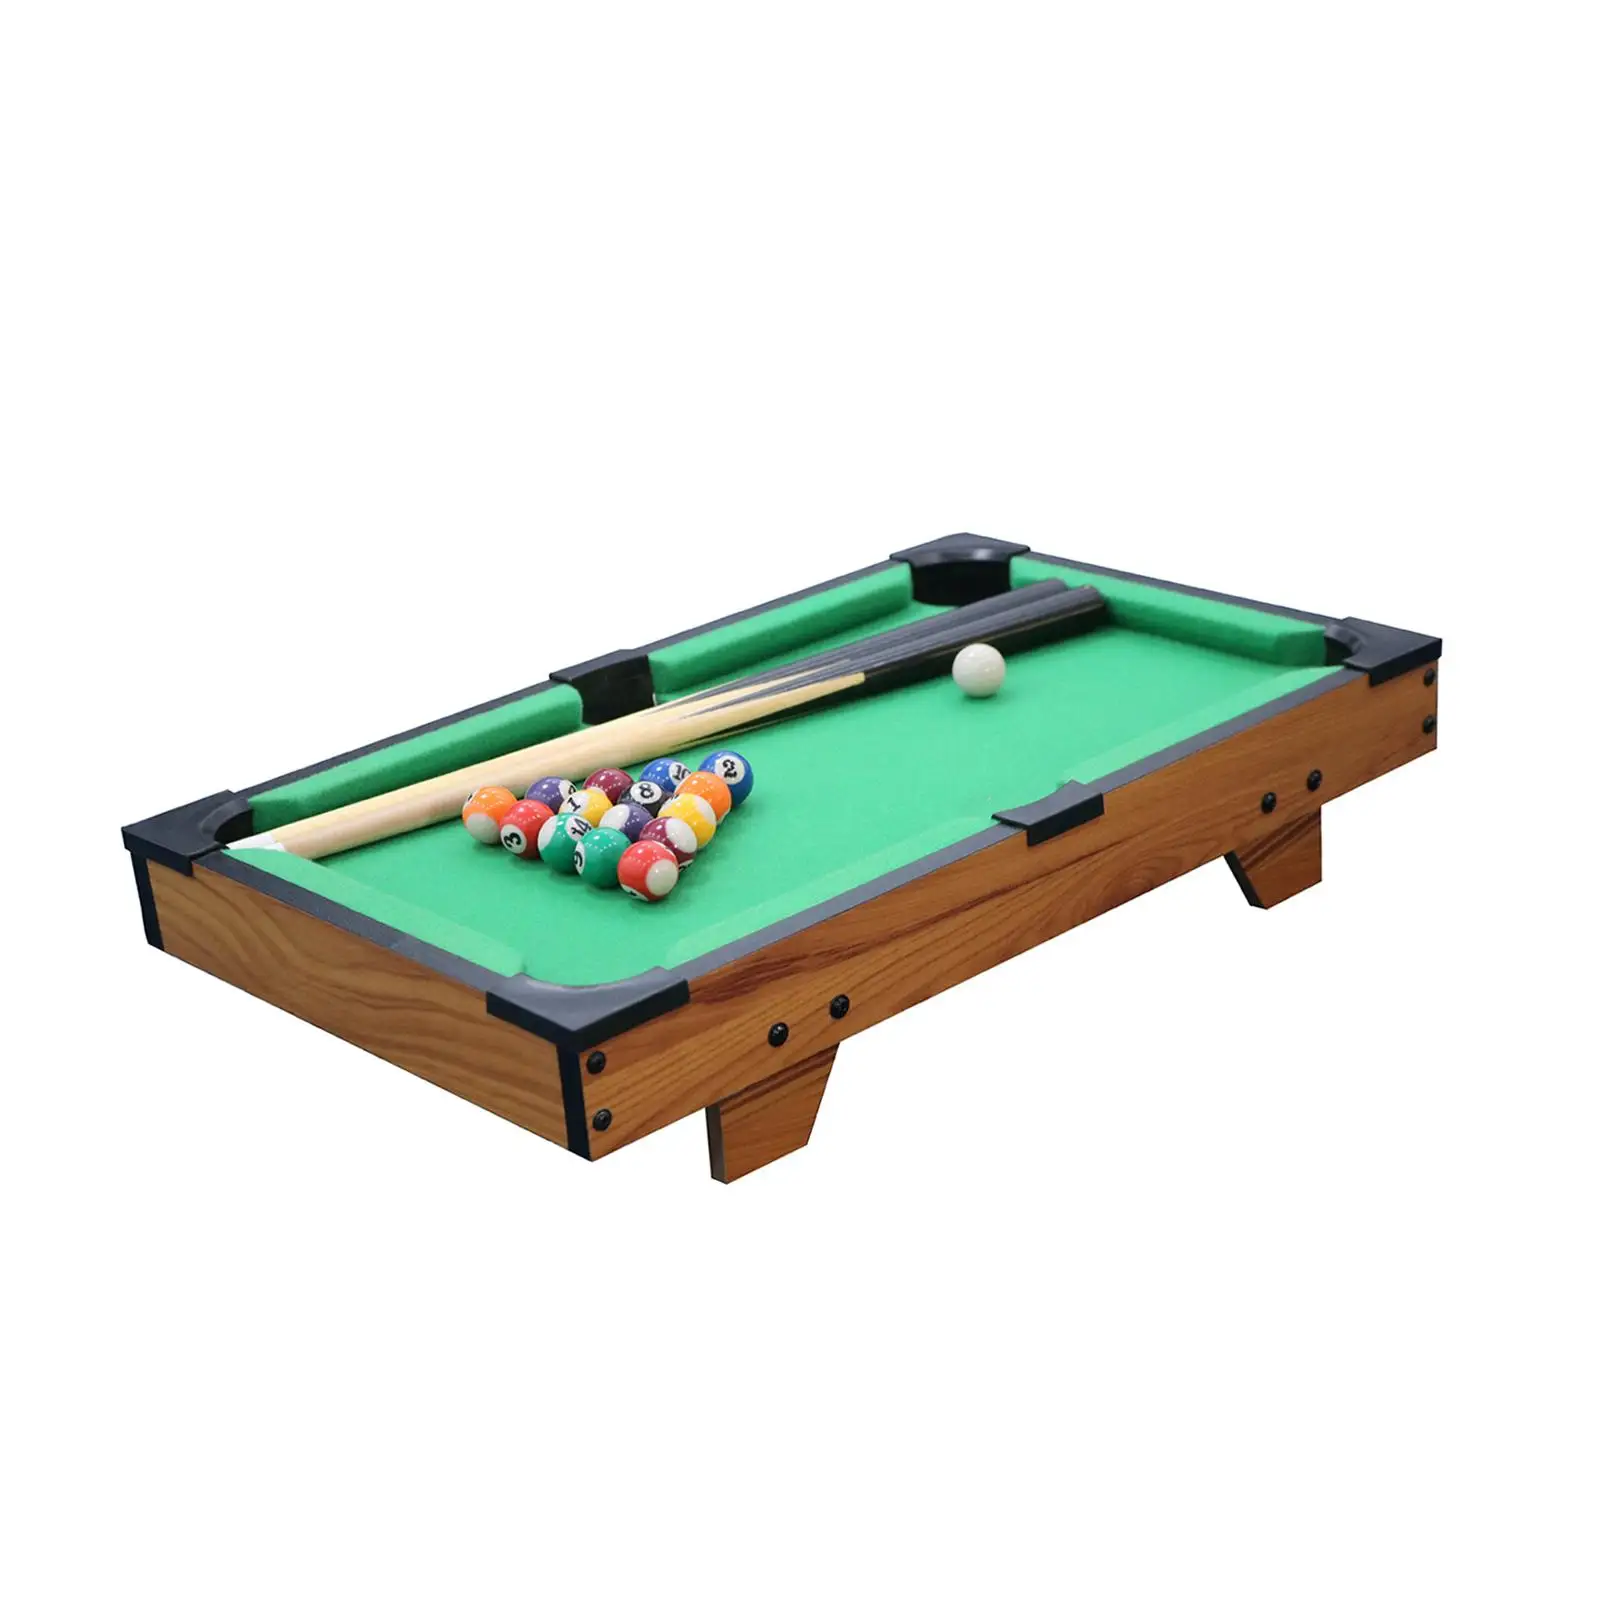 Cute Snooker with 2 Sticks Balls Play Game Set Cues Miniature Mini Table pool Billiards for Dorm Desktop Desk Family Kids